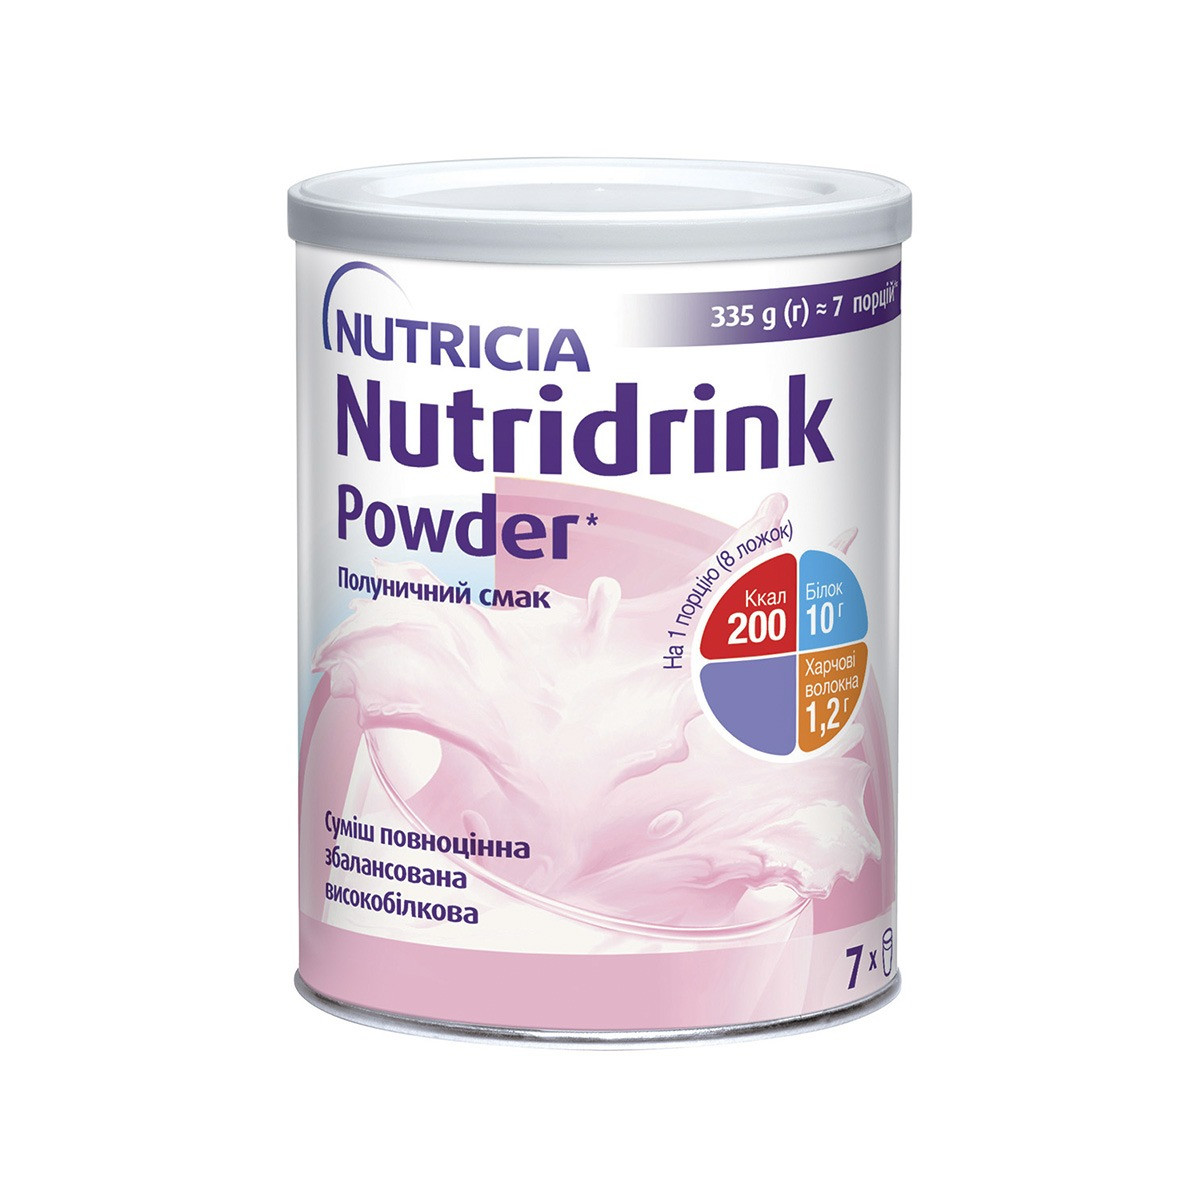 Нутридрінк Паудер зі смаком полуниці/Nutridrink Powder Strawberry flavour 335г.